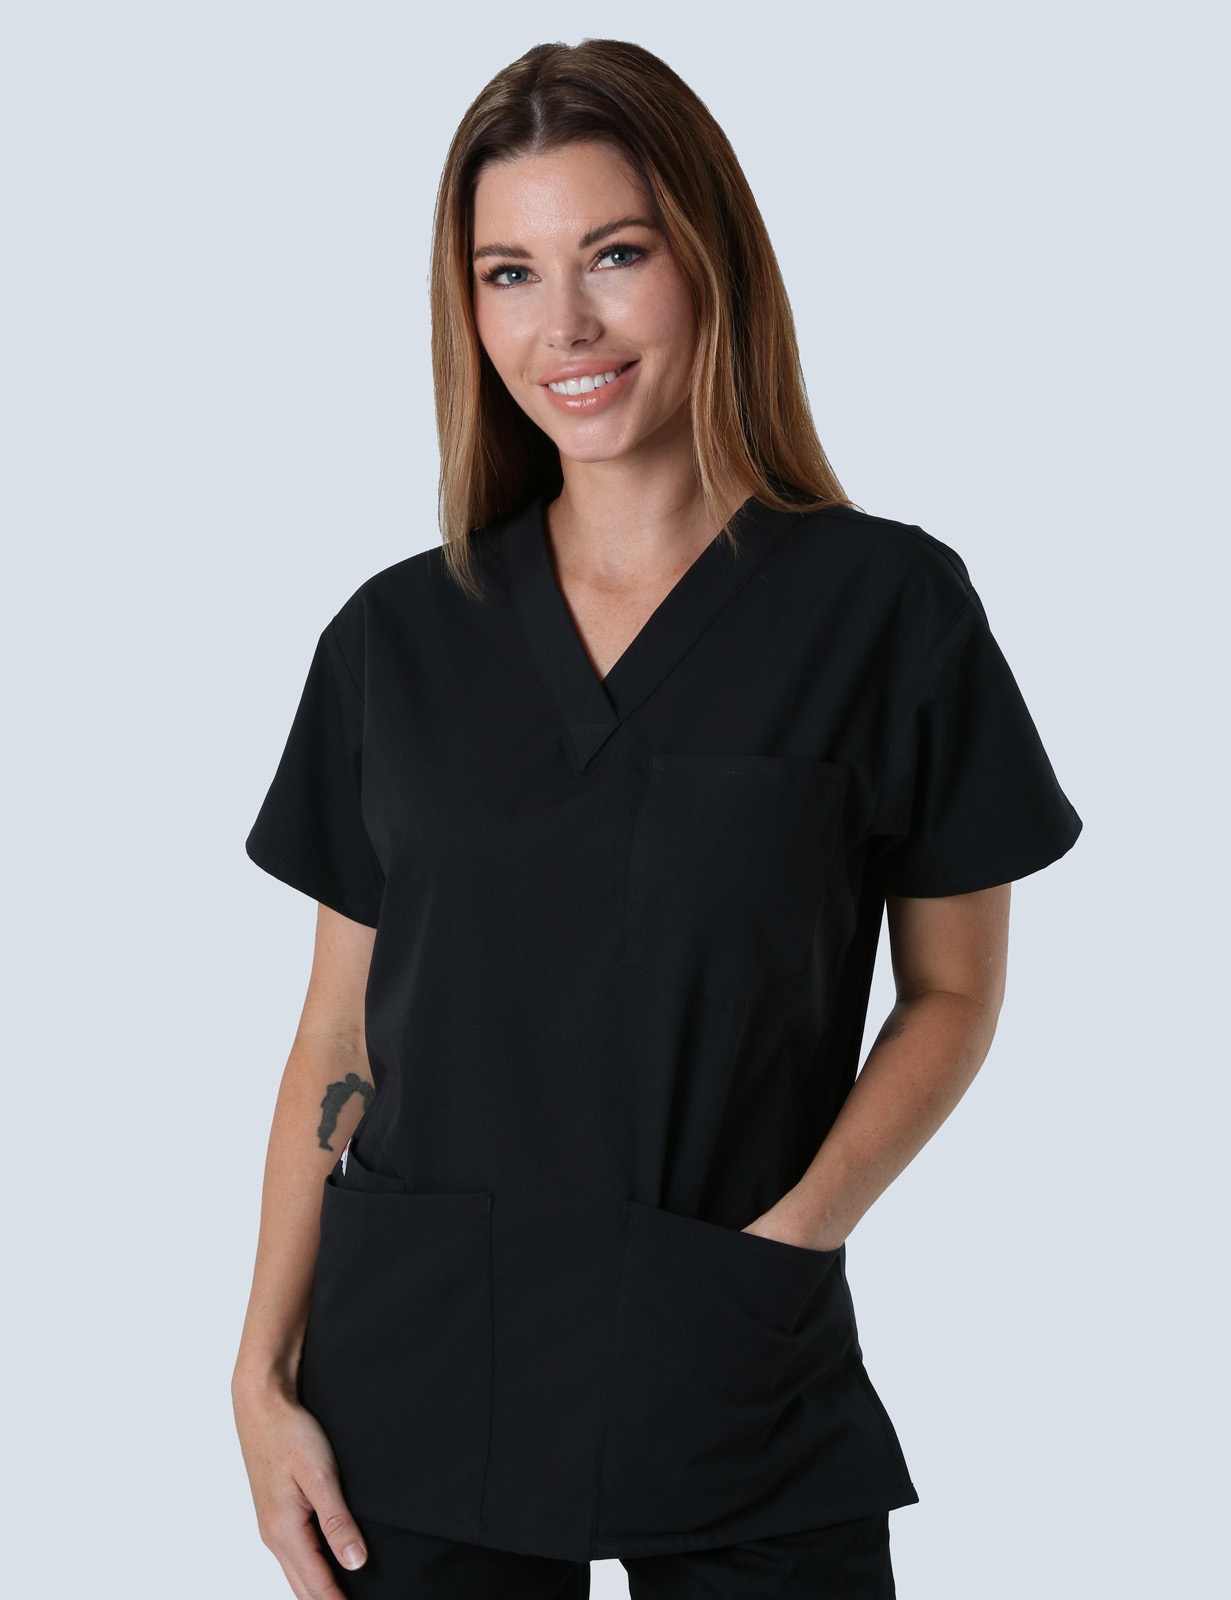 Logan Hospital - Medical Imaging Assistant (4 Pocket Scrub Top and Cargo Pants in Black incl Logos)